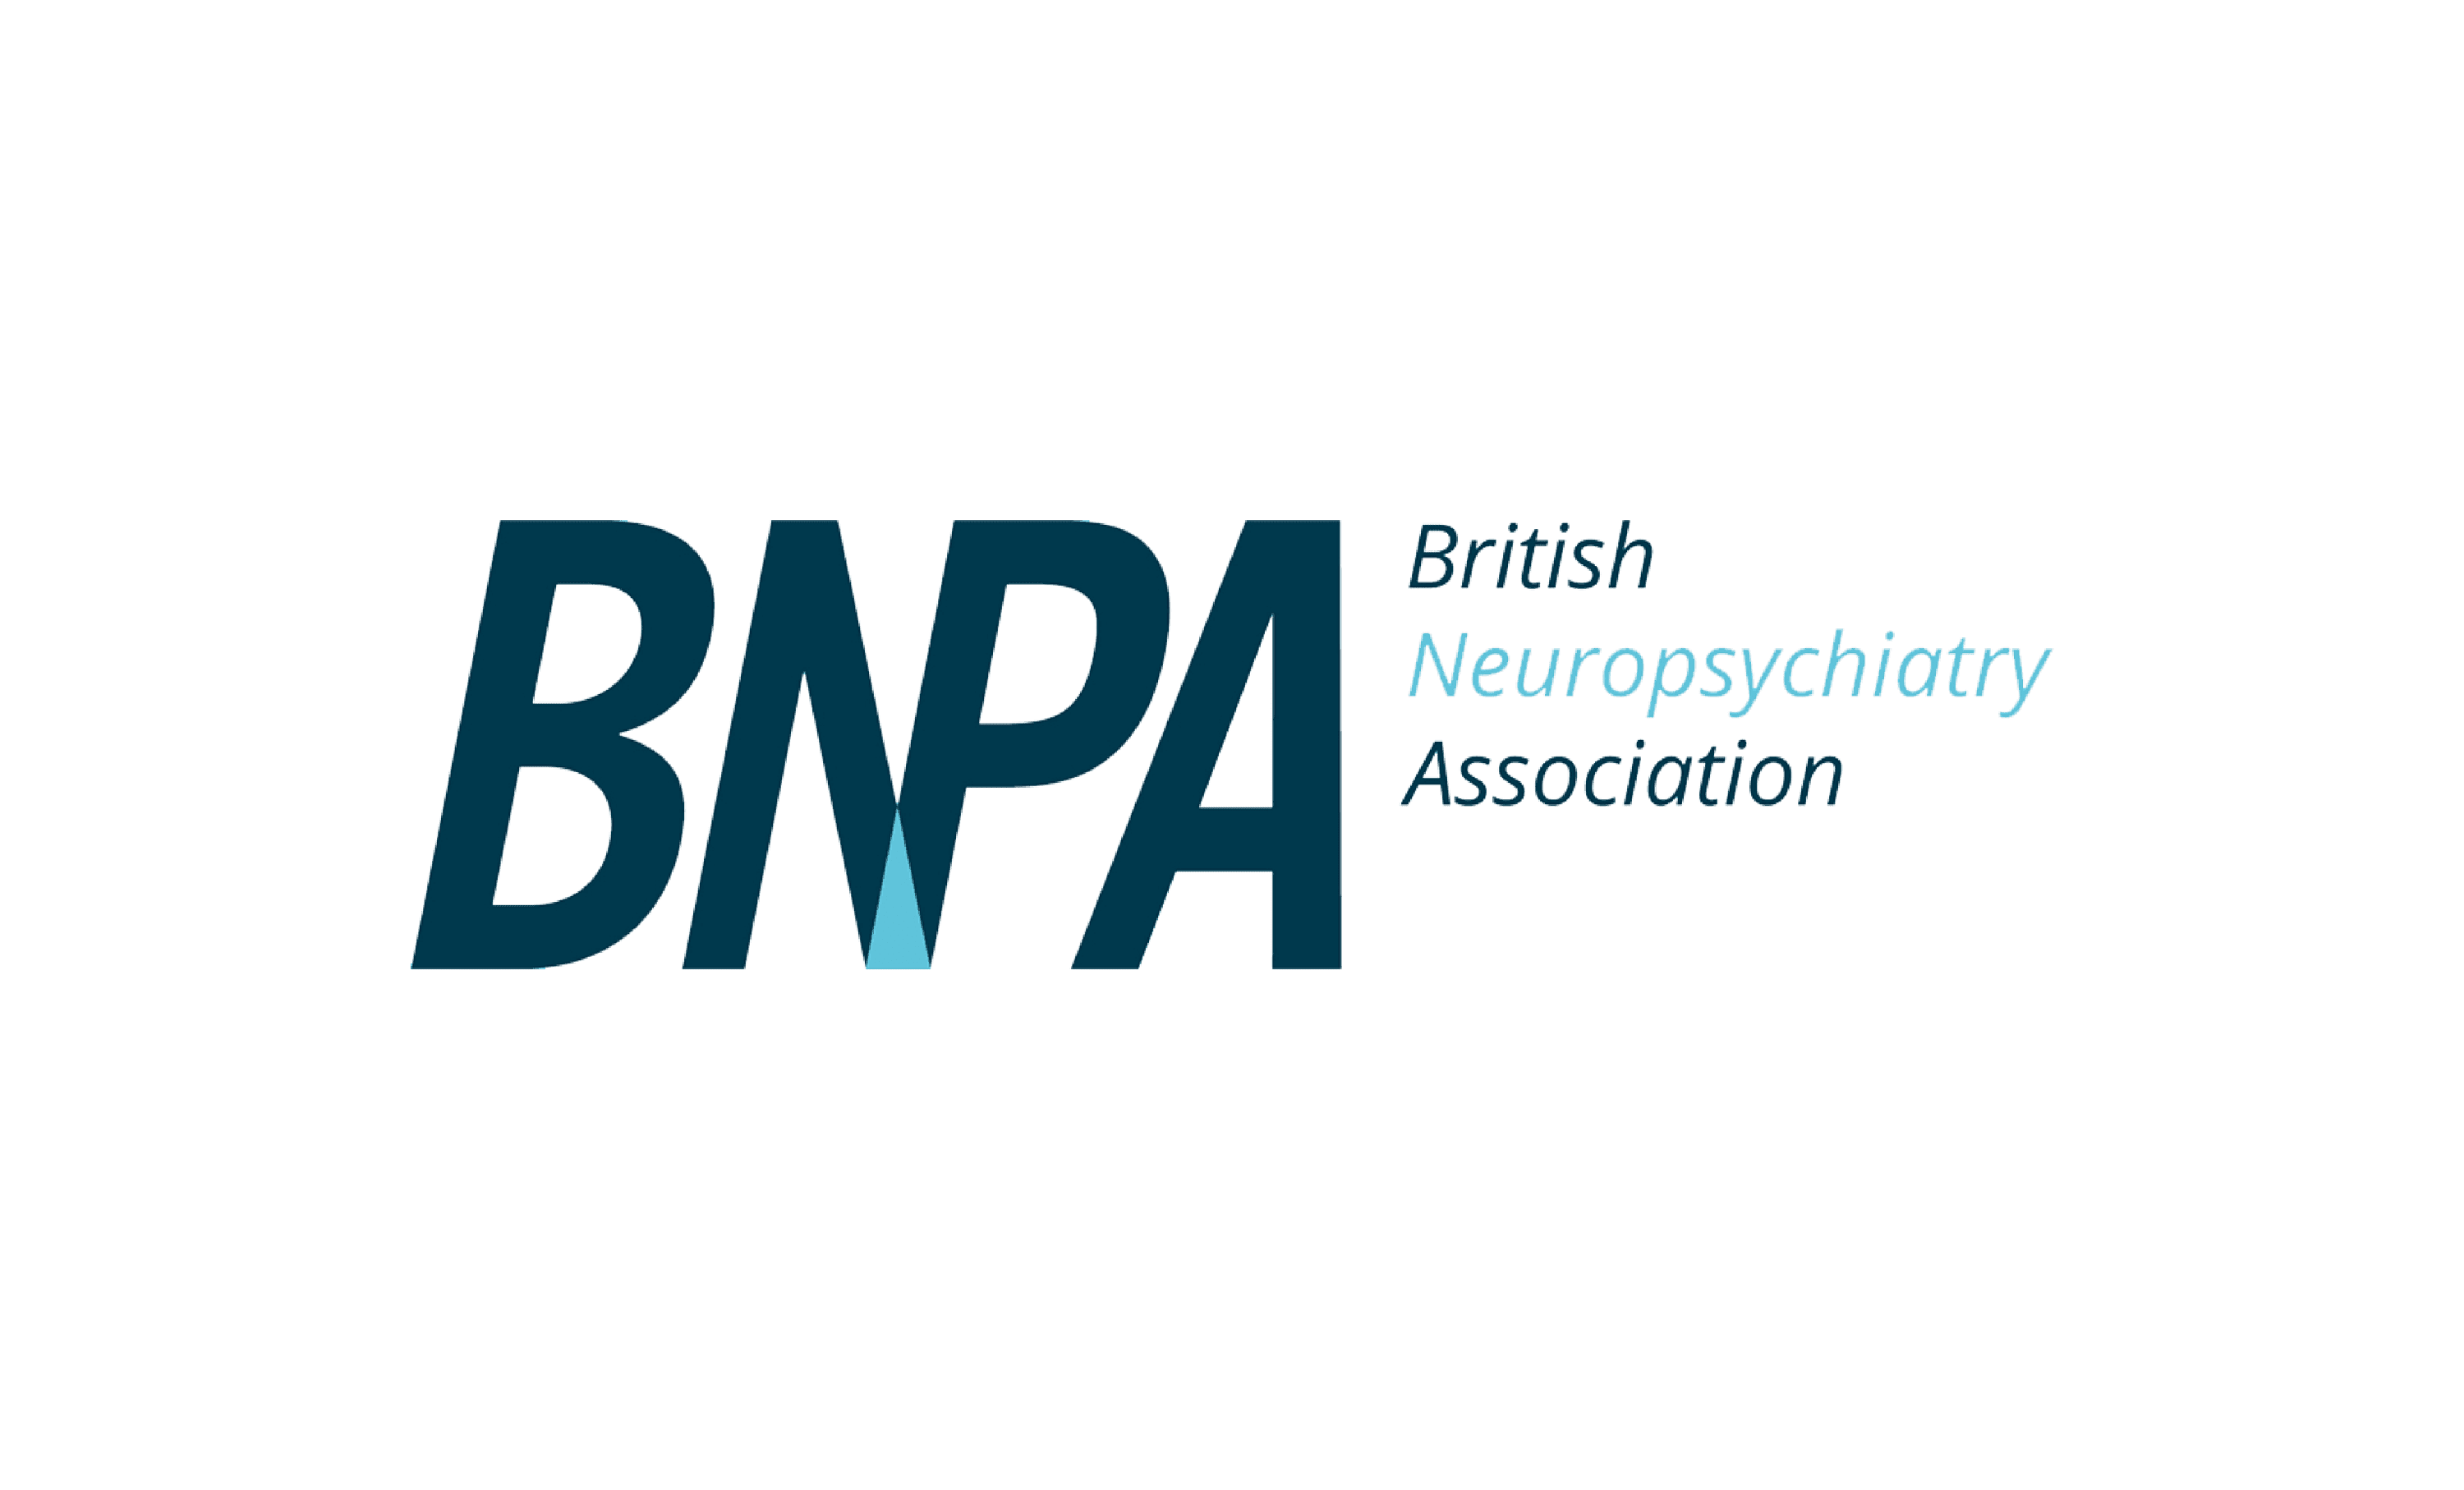 The British Neuropsychiatry Association logo